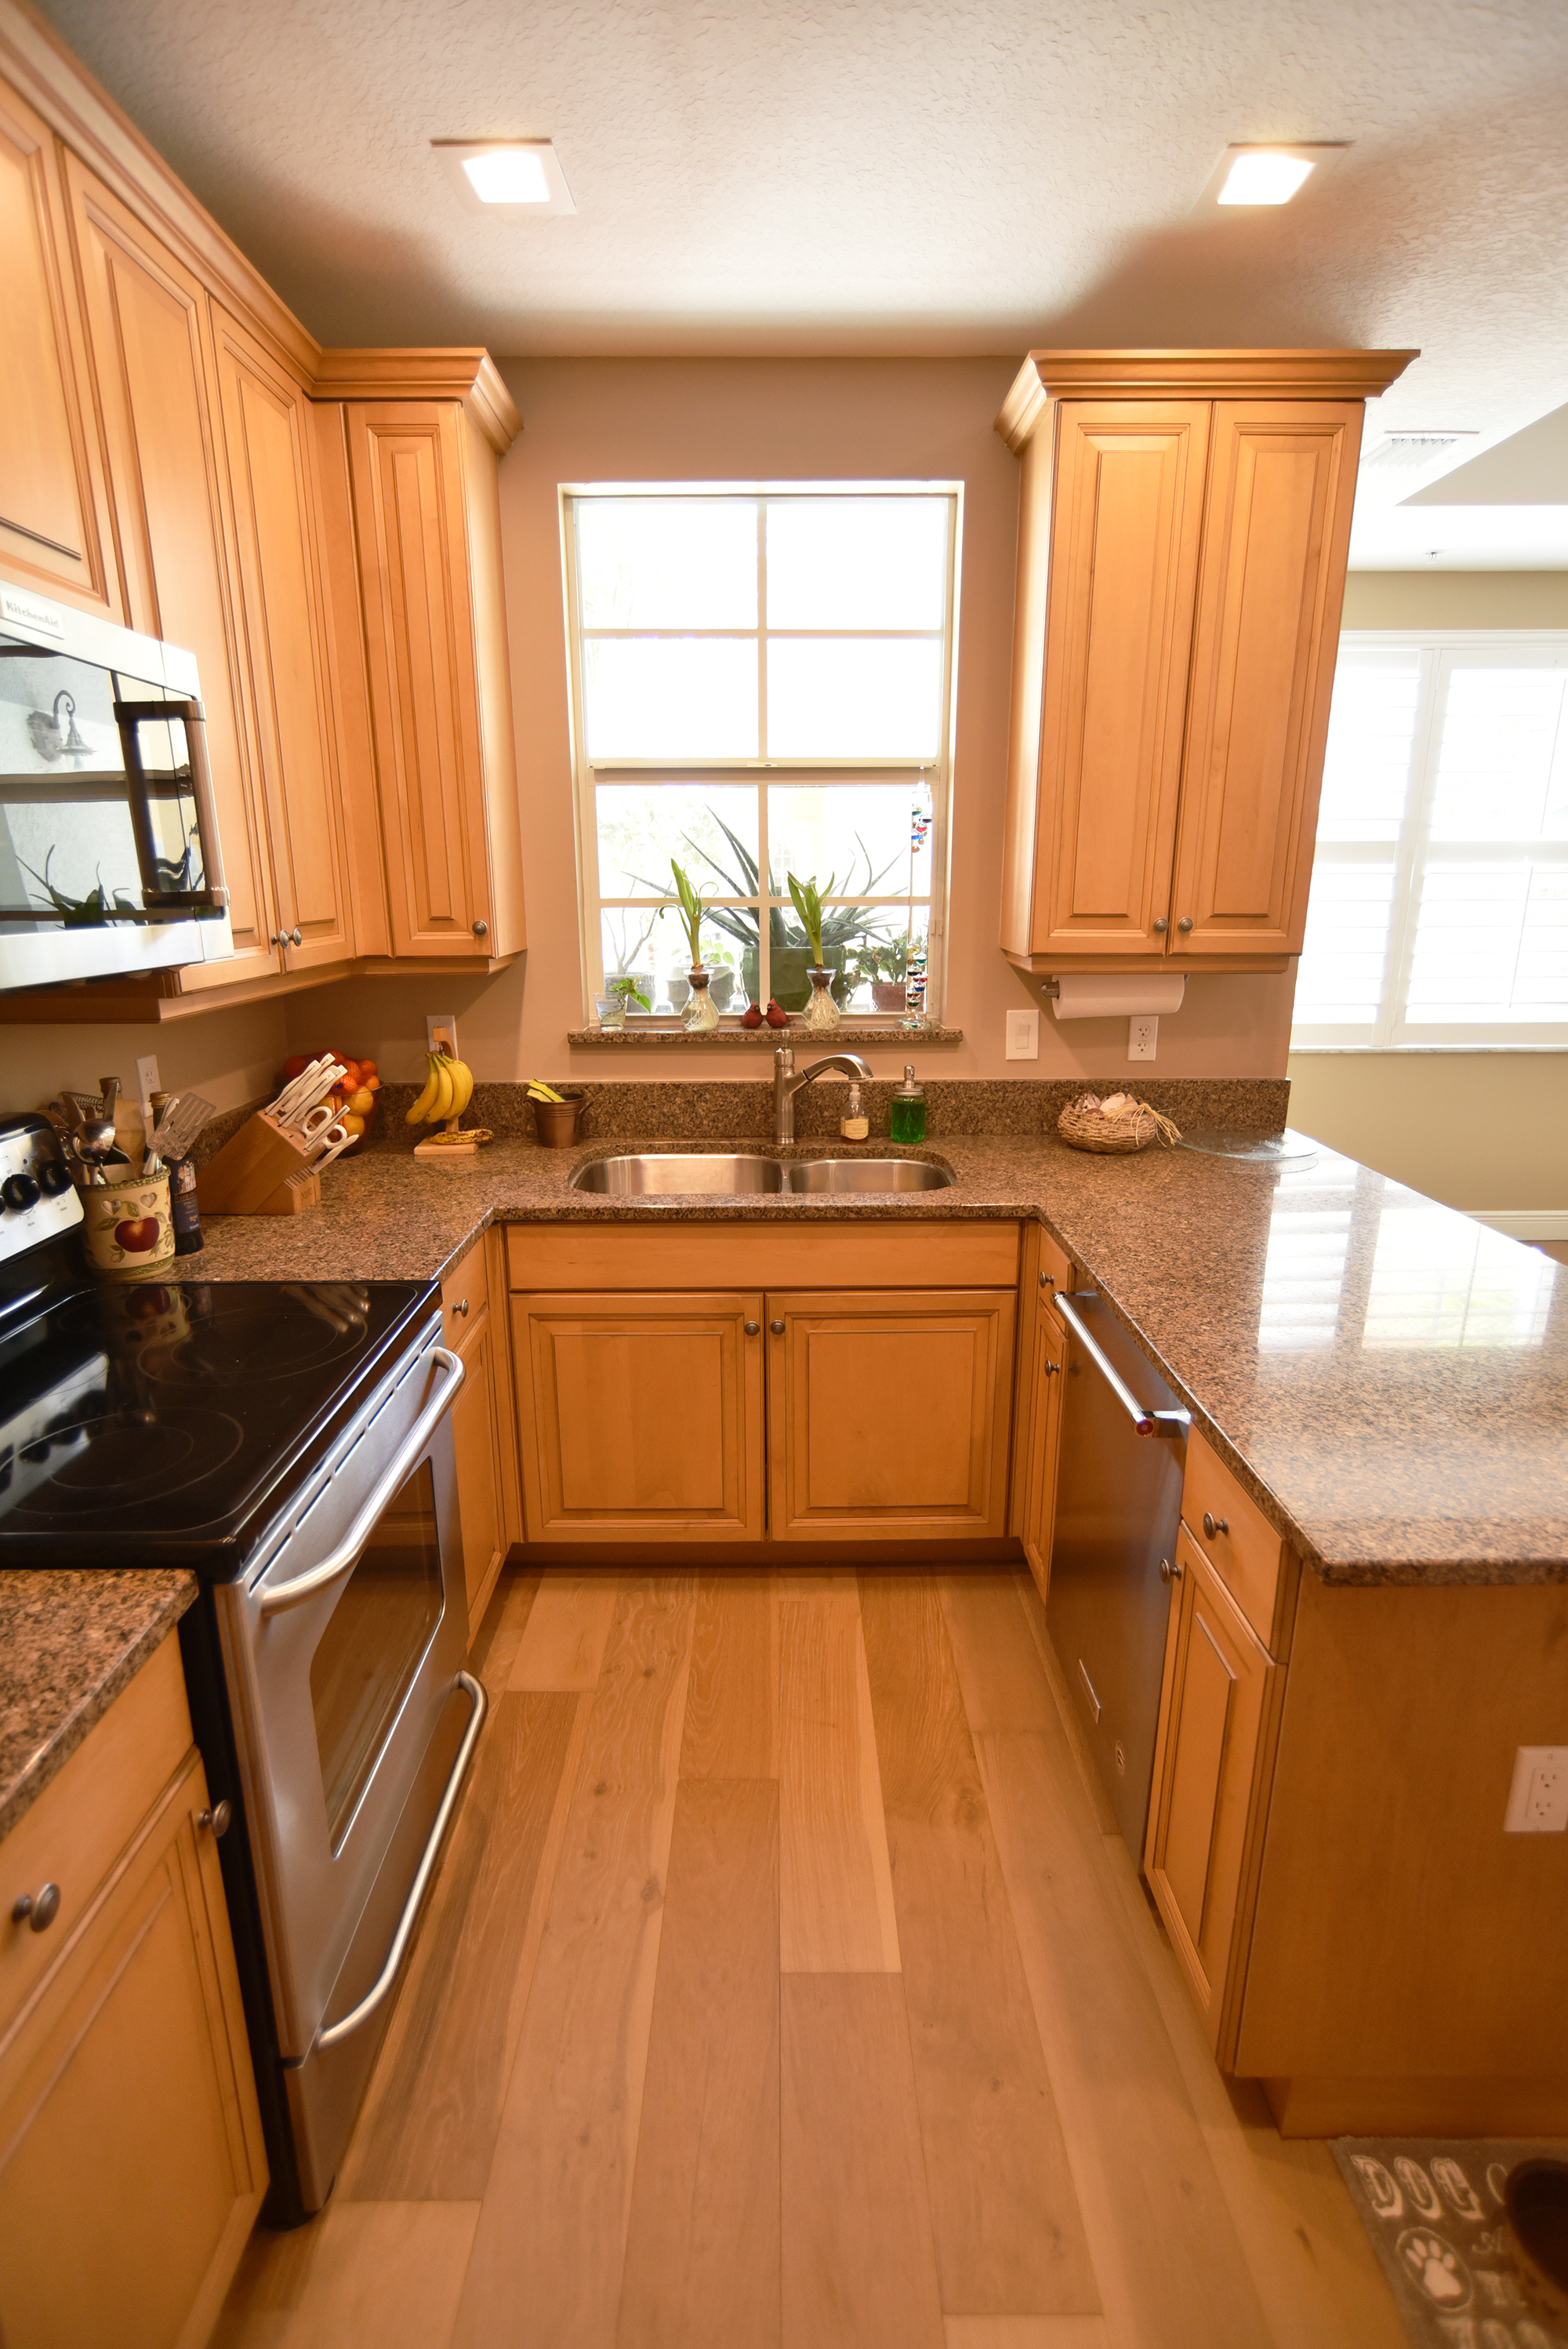 wood-floor-kitchen-by-Hooked-on-Hardwood.jpg